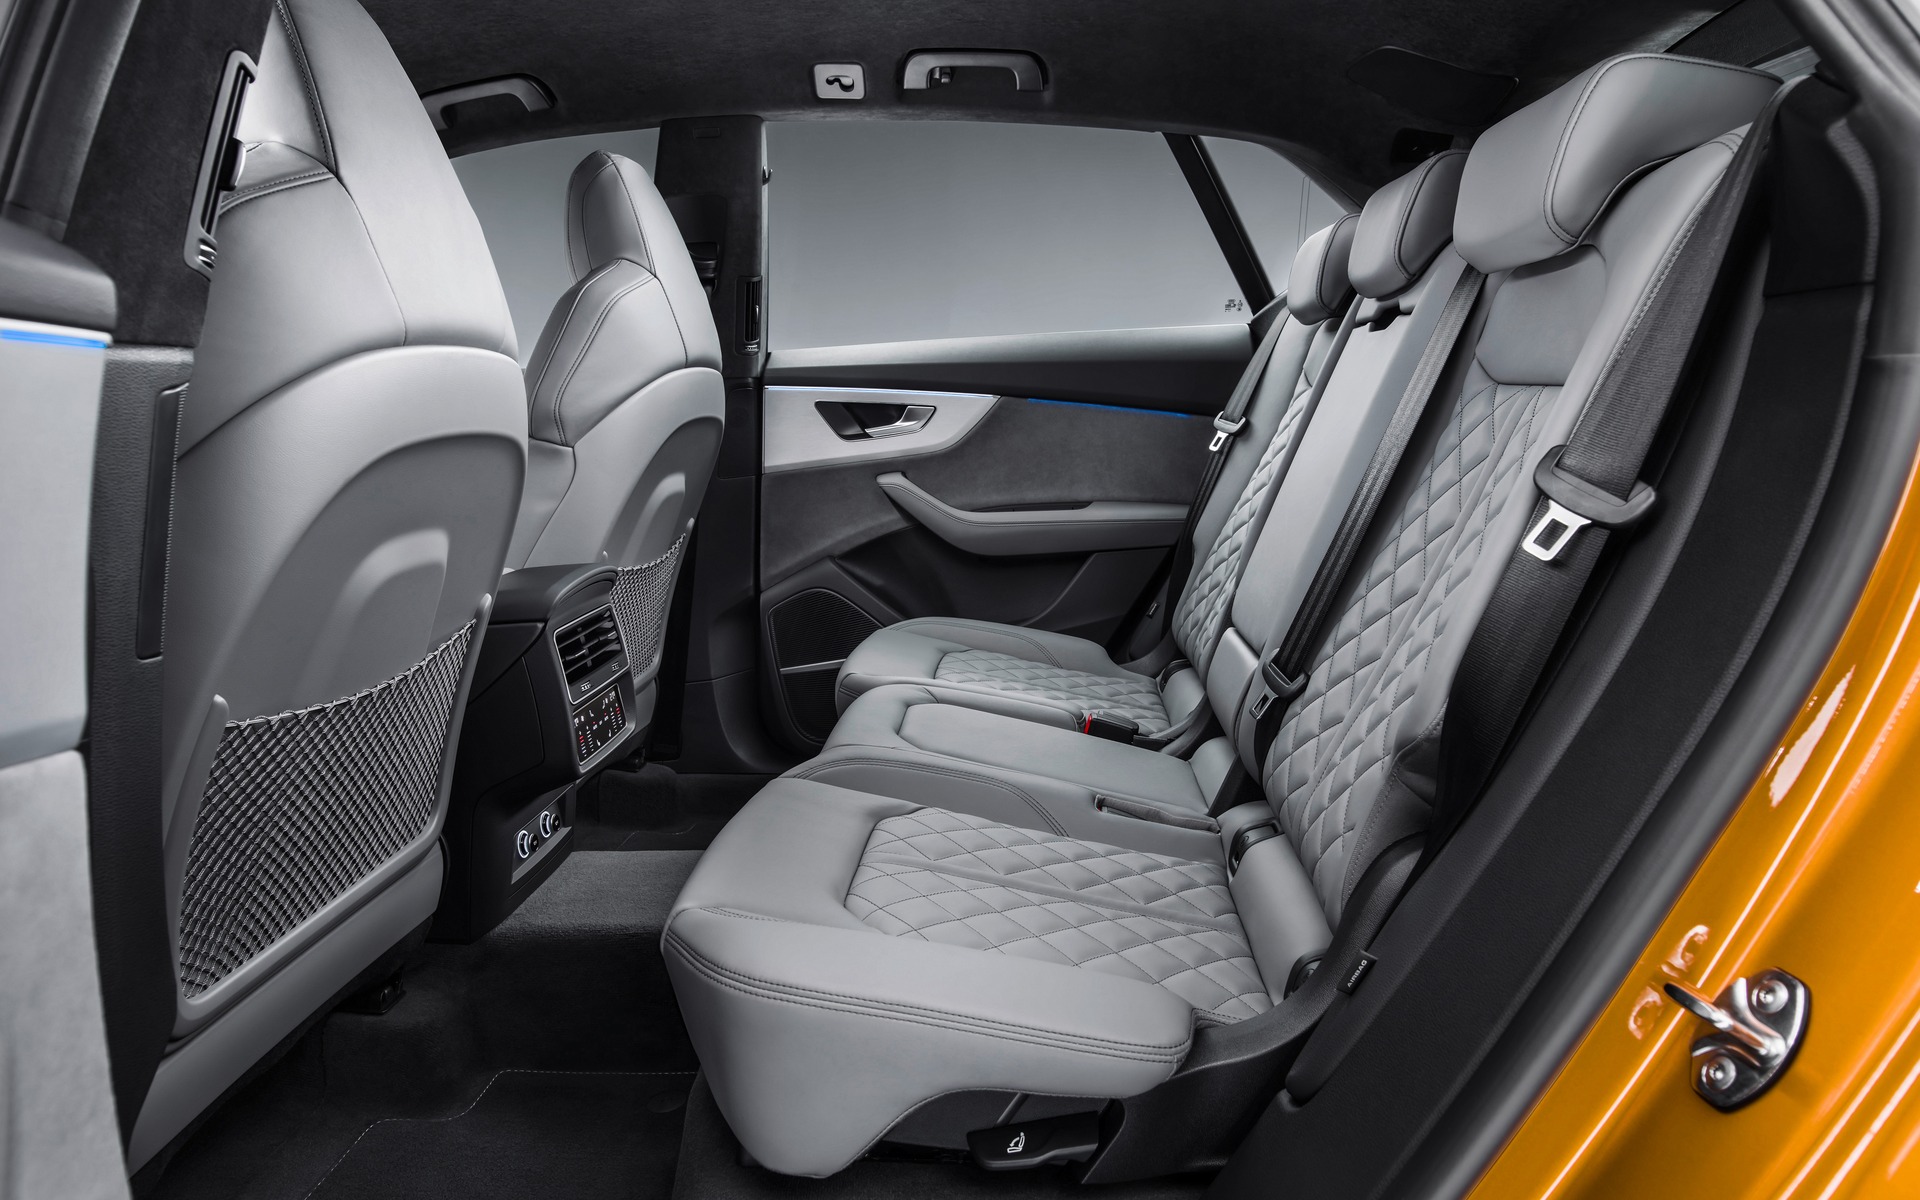 <p>2019 Audi Q8 interior, rear seats</p>